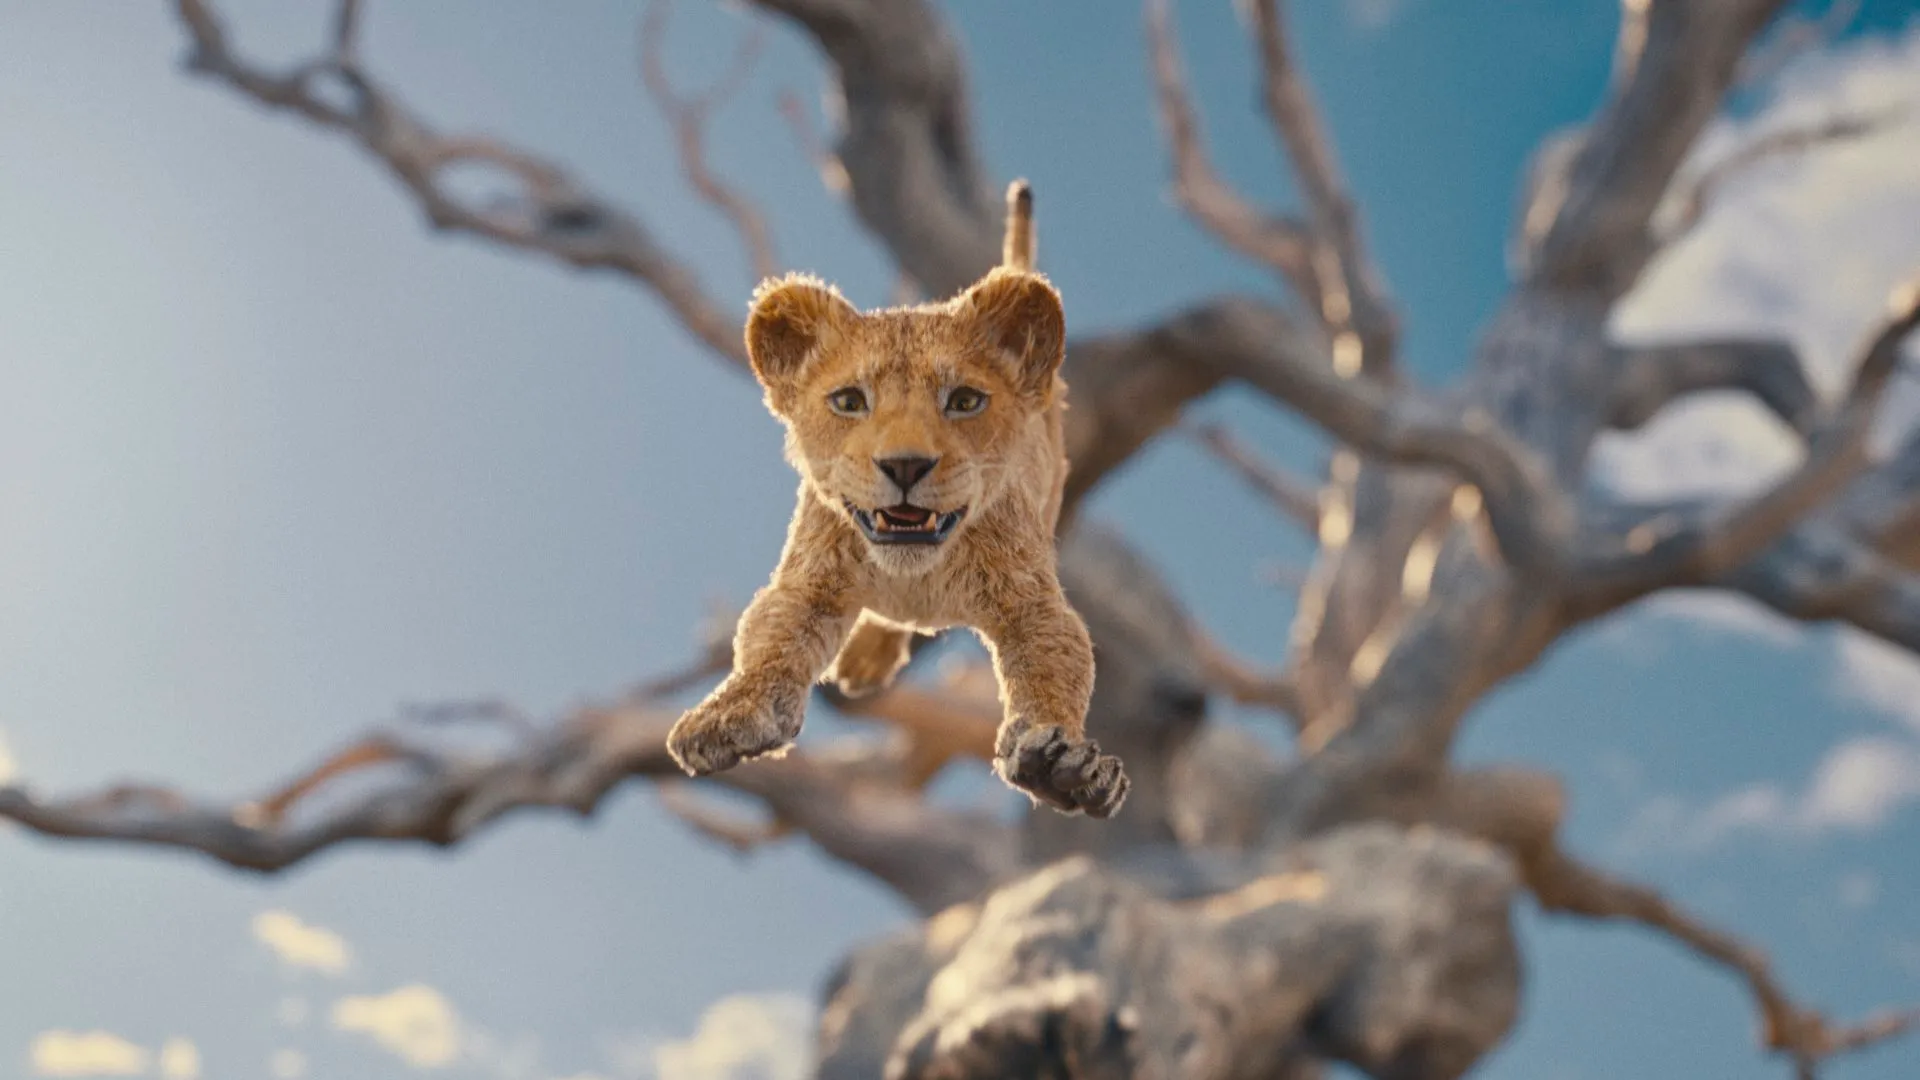 Mufasa The Lion King Trailer Previews Disney's Prequel Movie